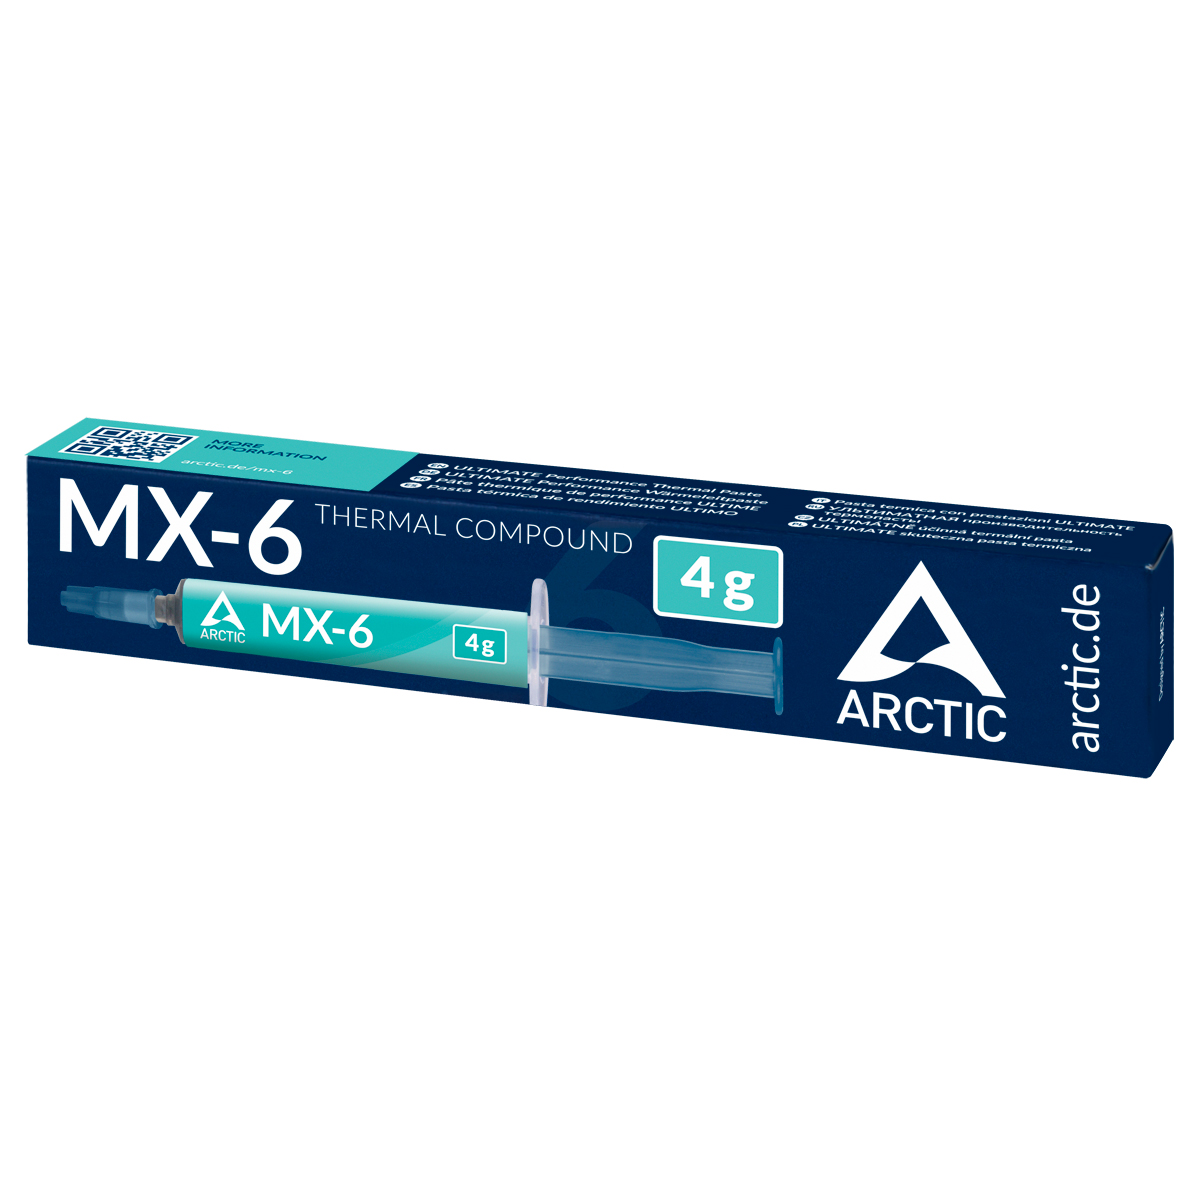 ARCTIC MX-6 4g Highest Performance -1